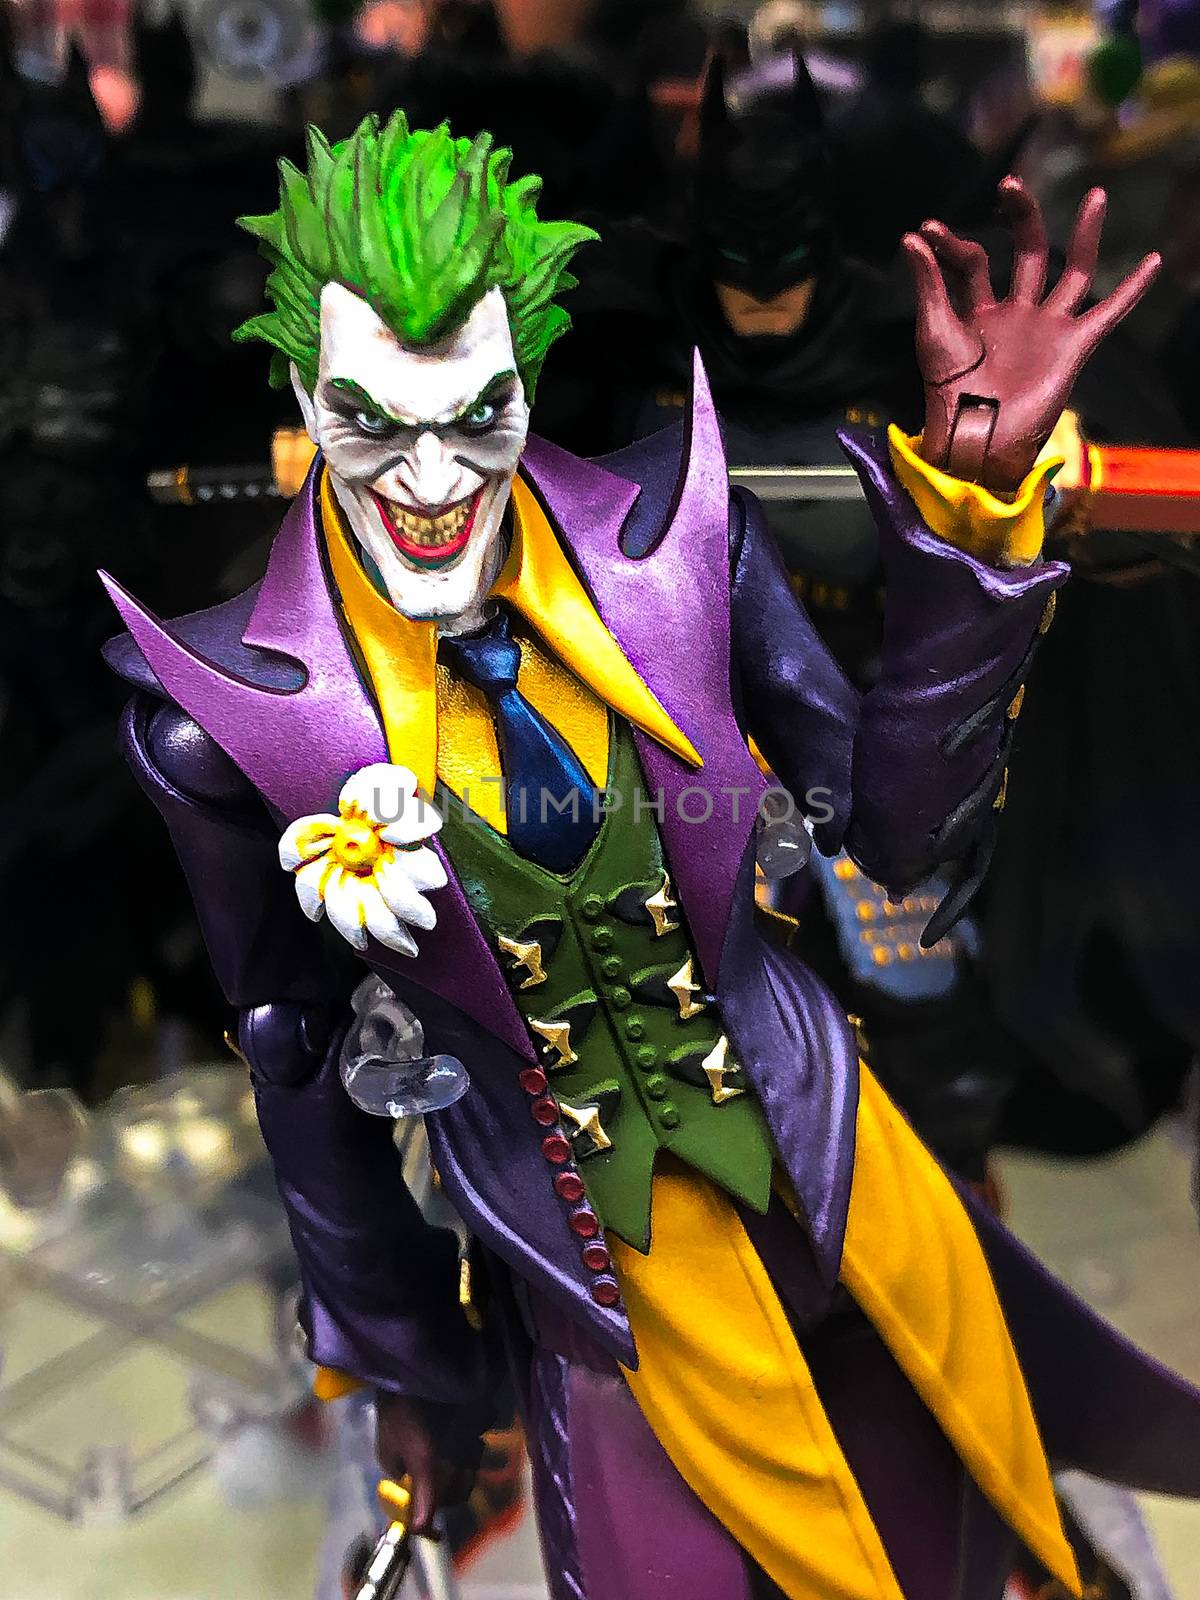 Osaka, Japan - Apr 23, 2019: Focused on fictional character figure from Arkham Asylum Joker figure out of toys shop.